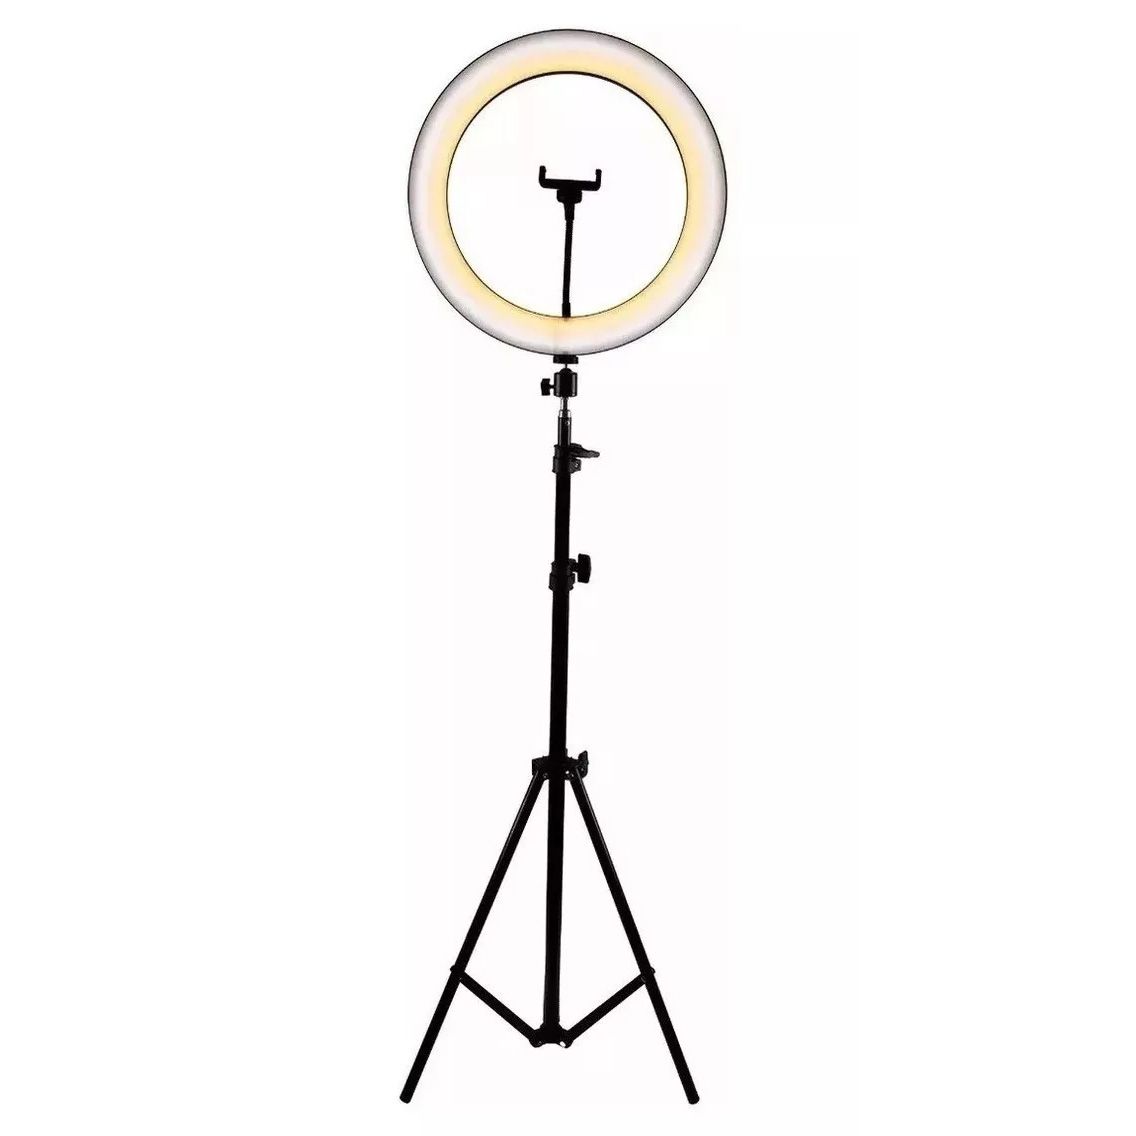 Aro de Luz con Tripie 26cm /RING LIGHT LED- TRI-COLOR - Fotomecánica